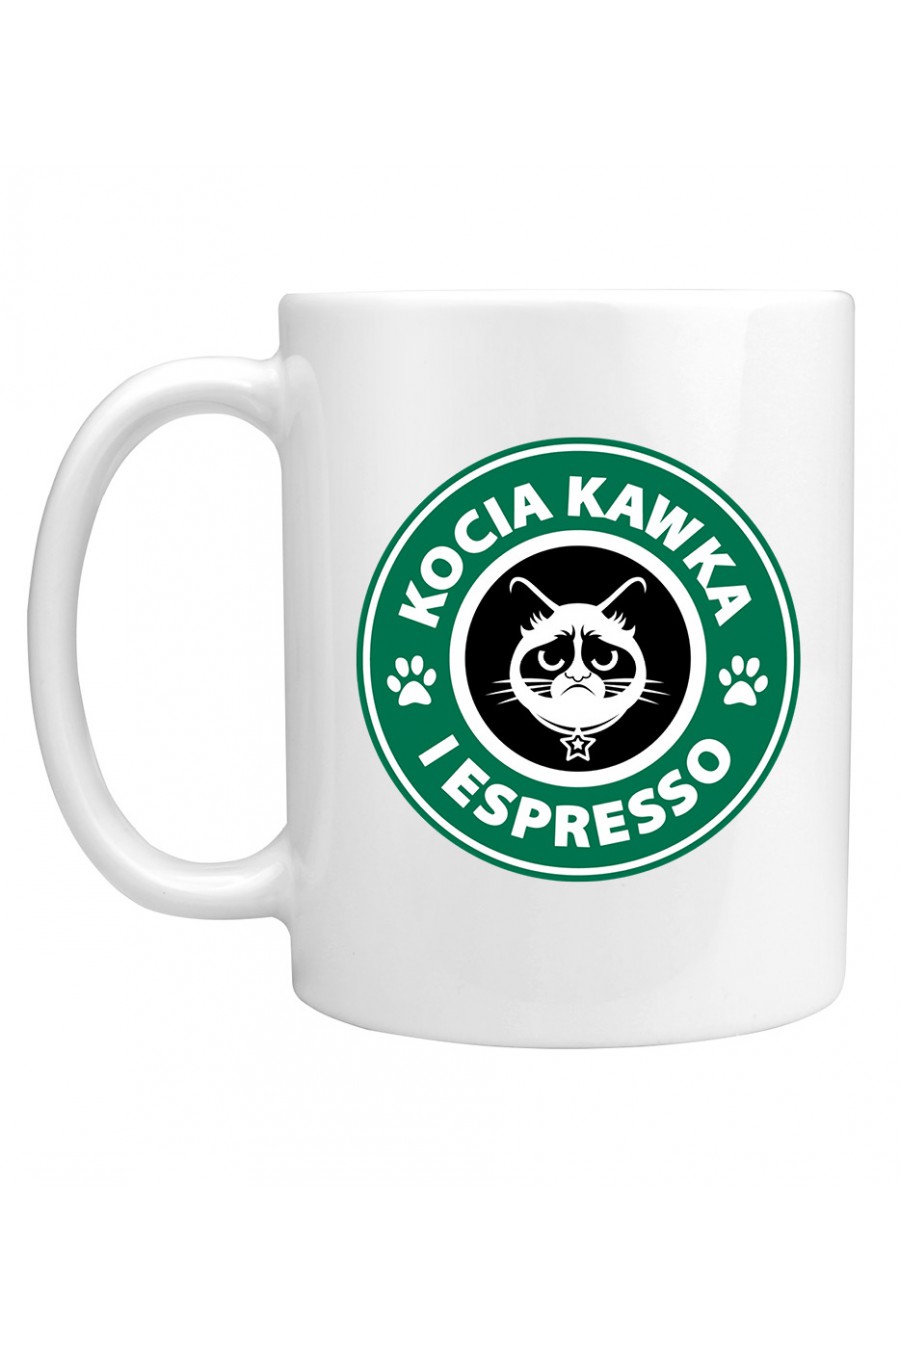 Kubek Kocia Kawka I Espresso 2